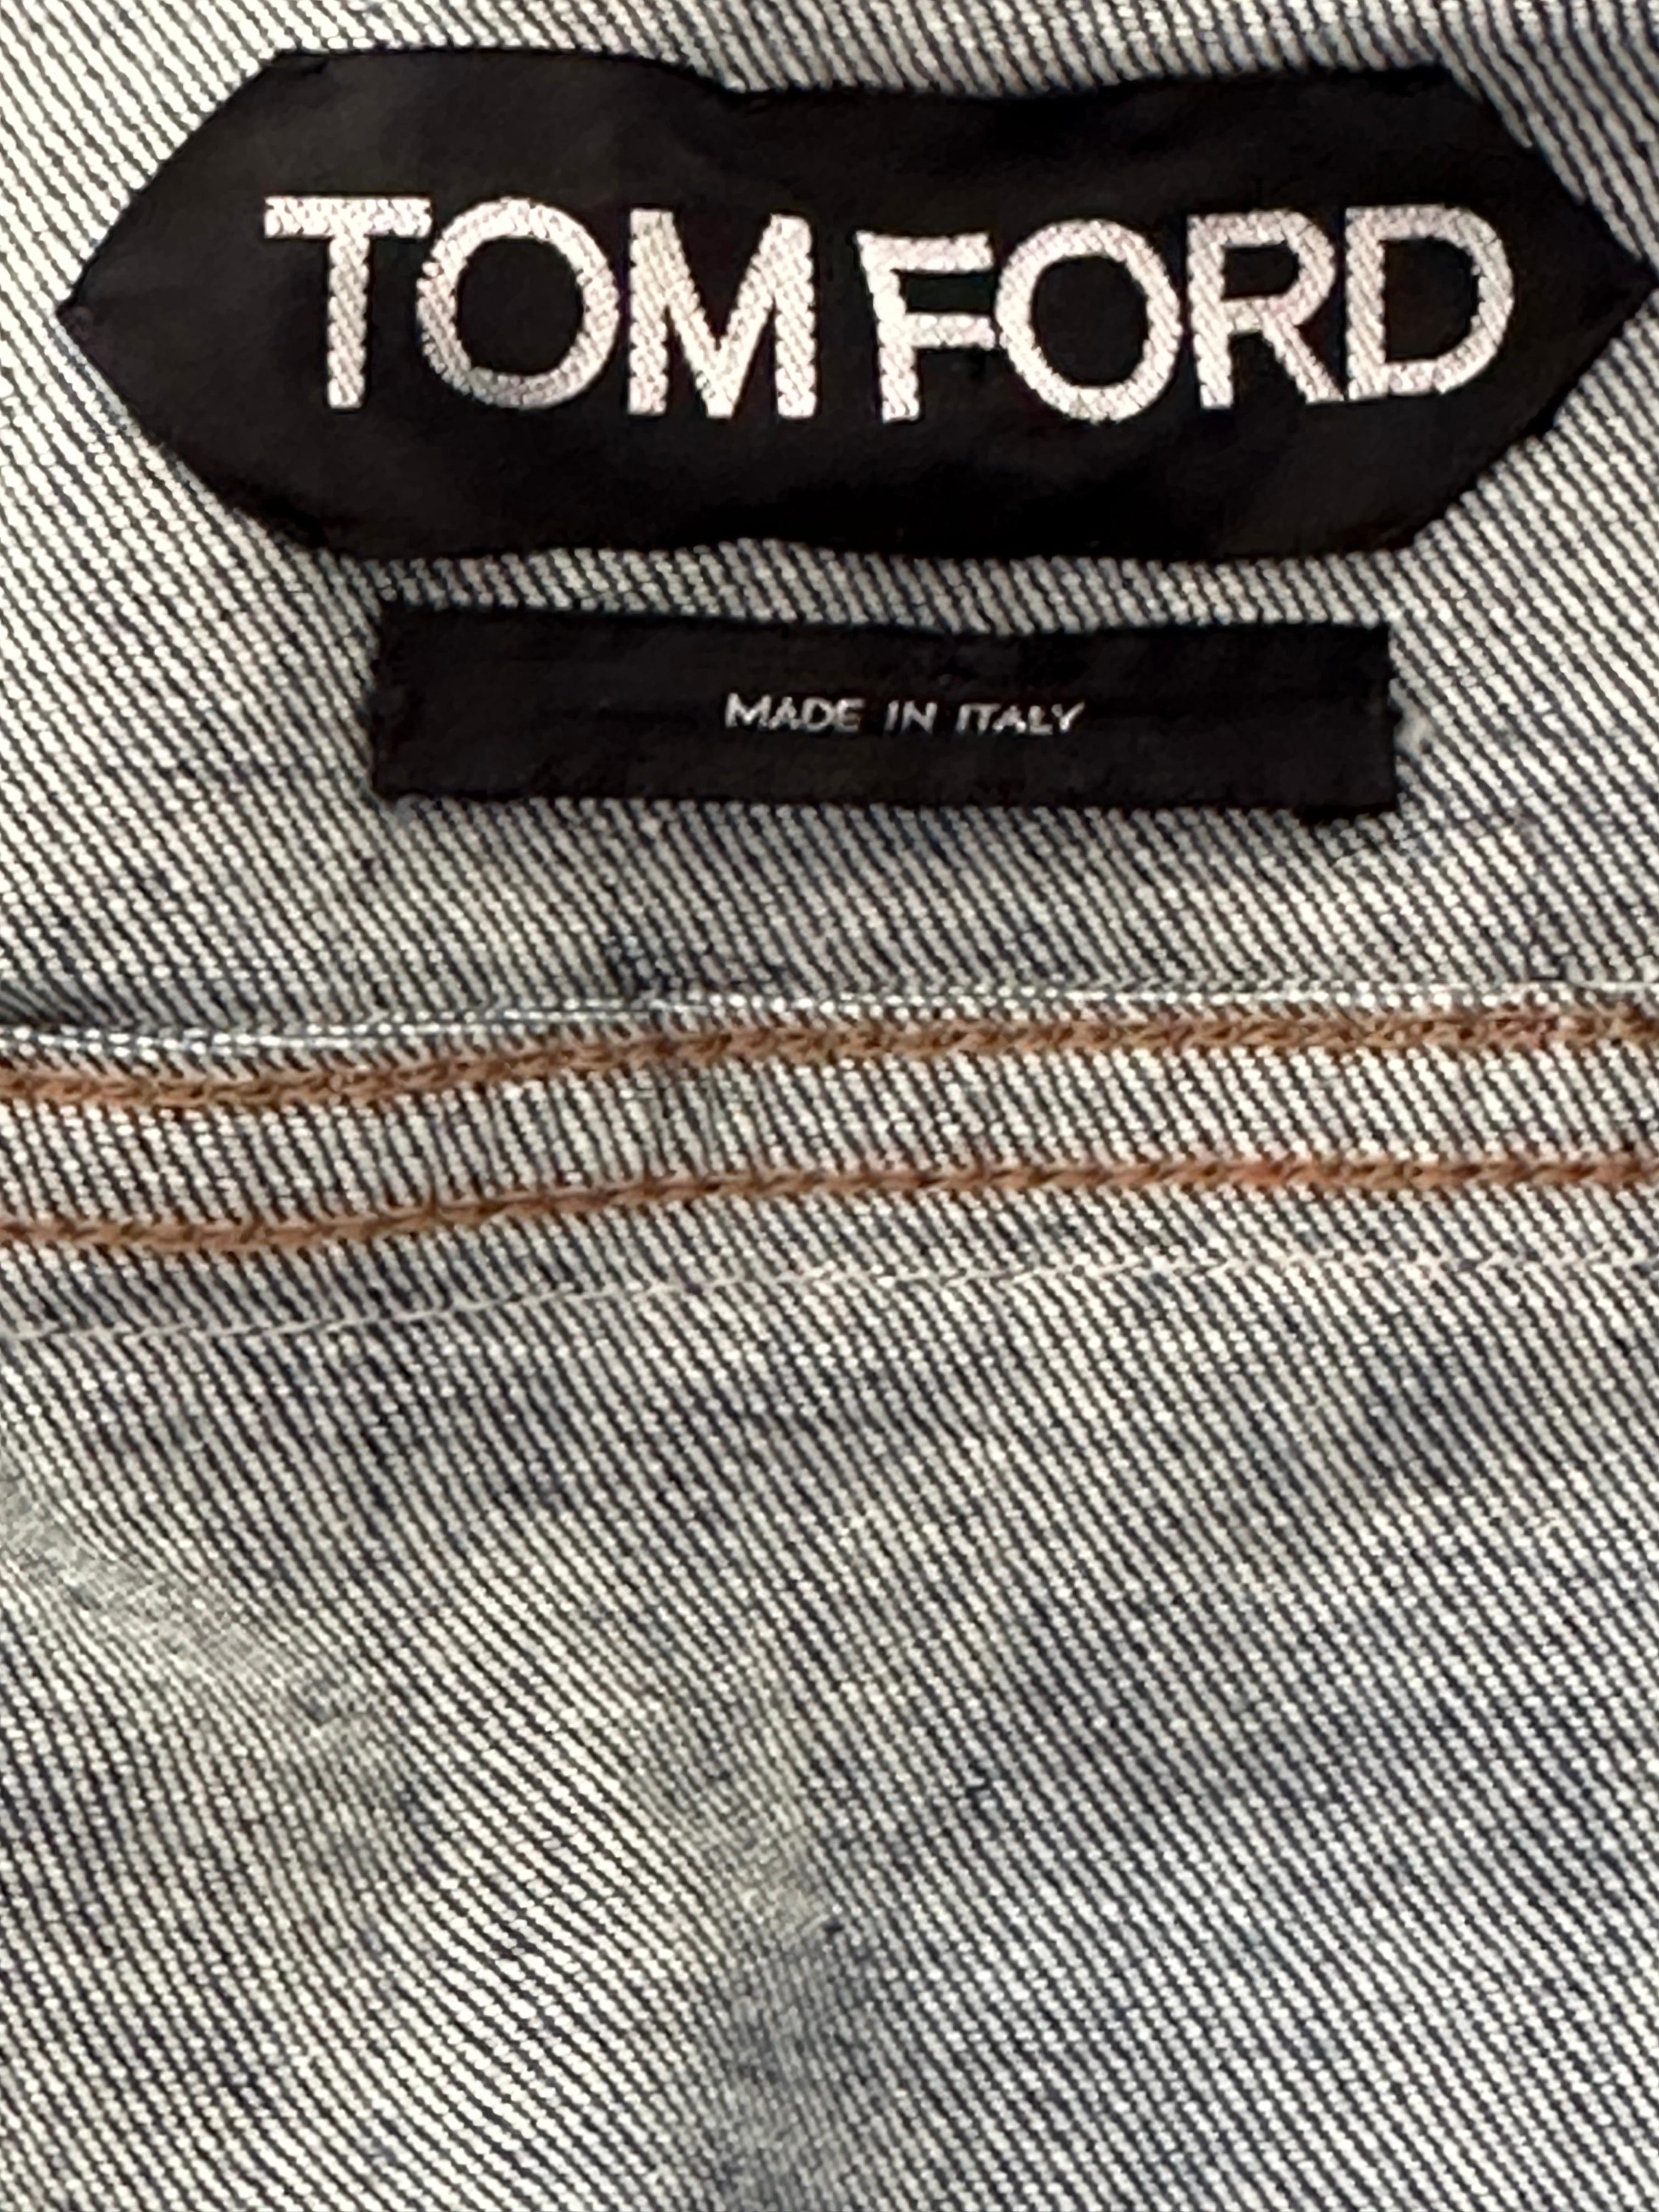 Tom Ford Denim Rare Vintage Jean Jacket with Leopard Print Lapine Fur (Rabbit)
Size Small (38)
Bust 35